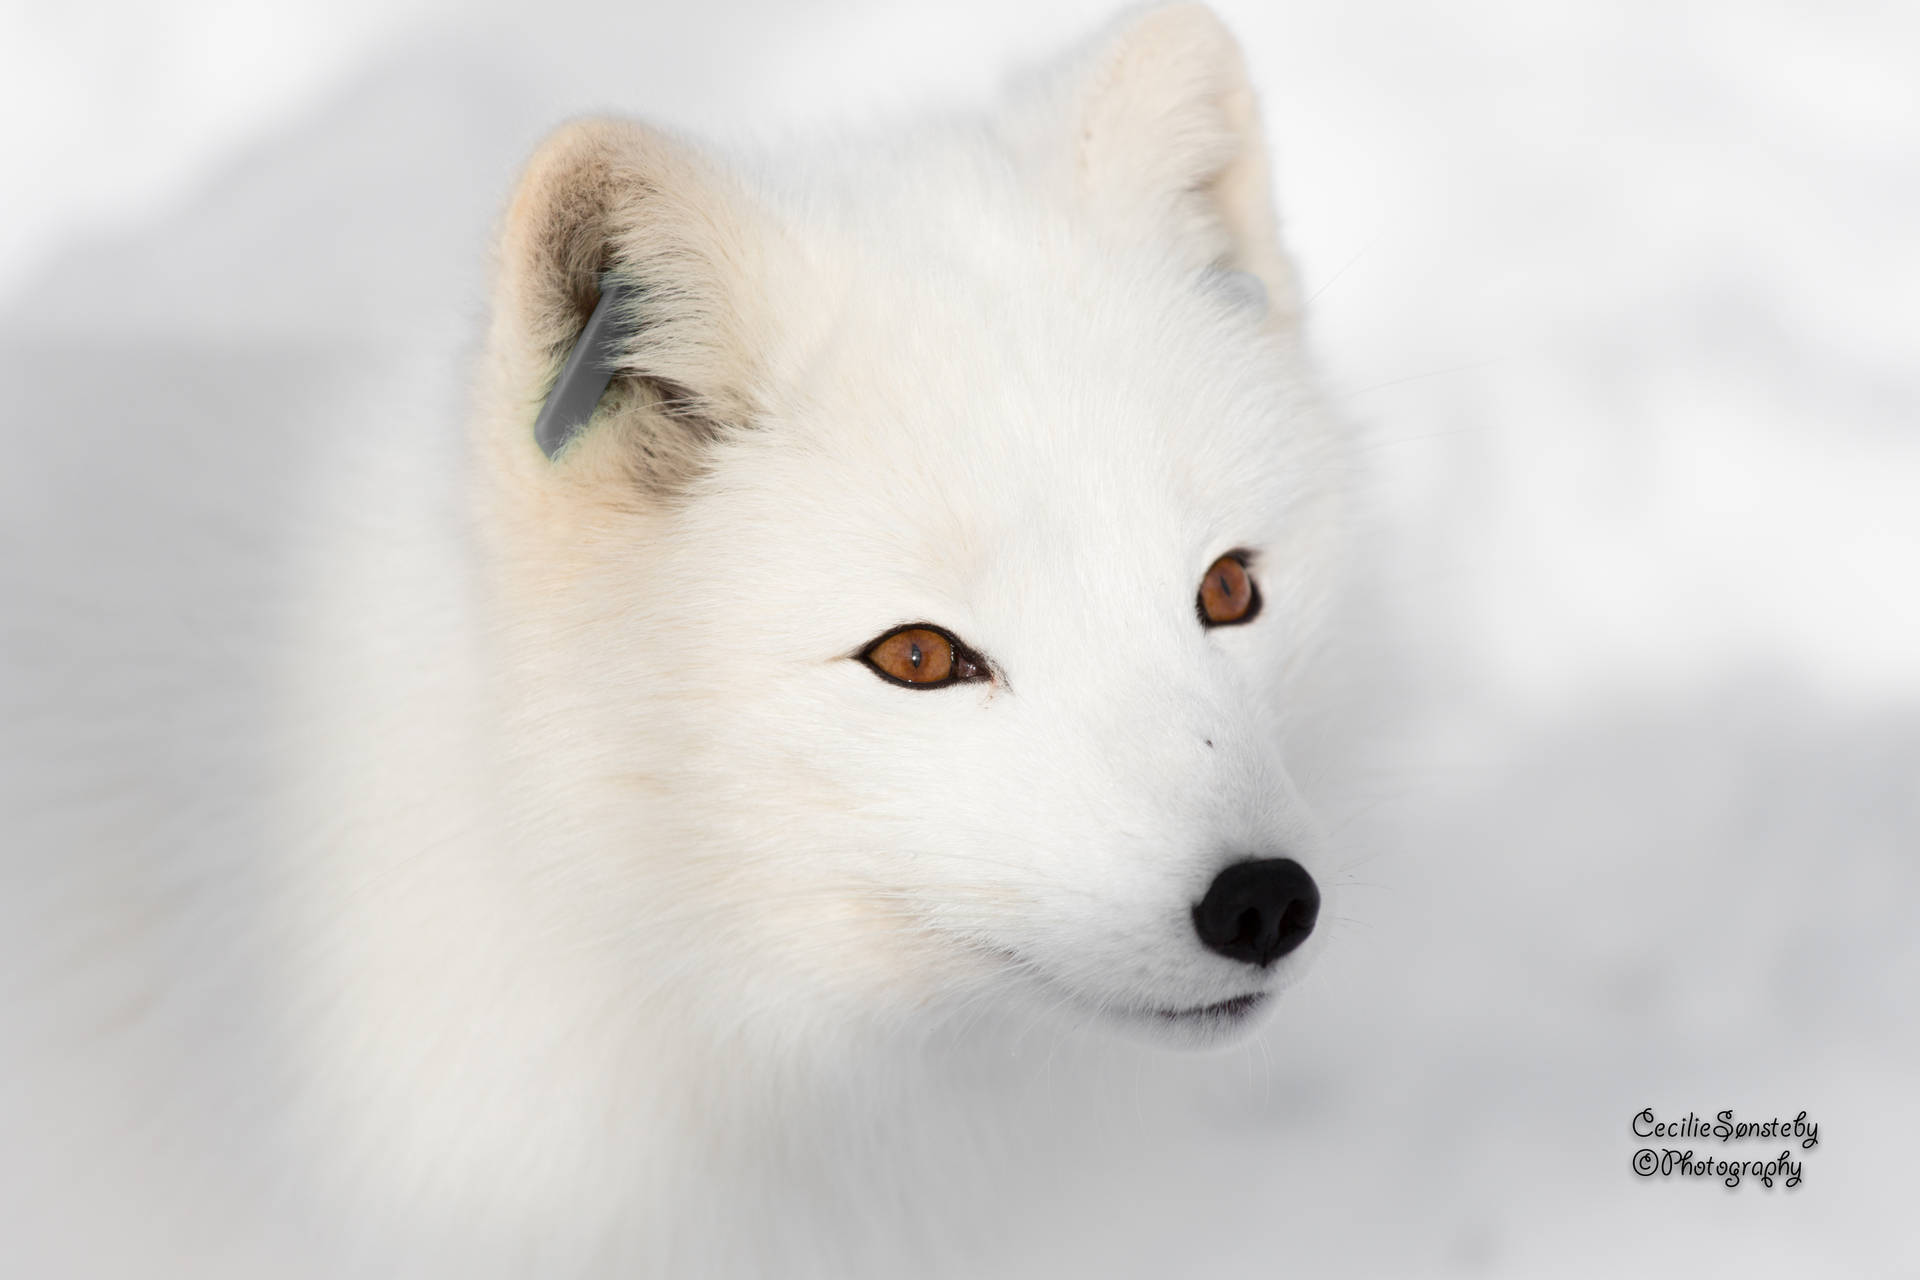 A White Fox In Serene Snow Surroundings. Wallpaper